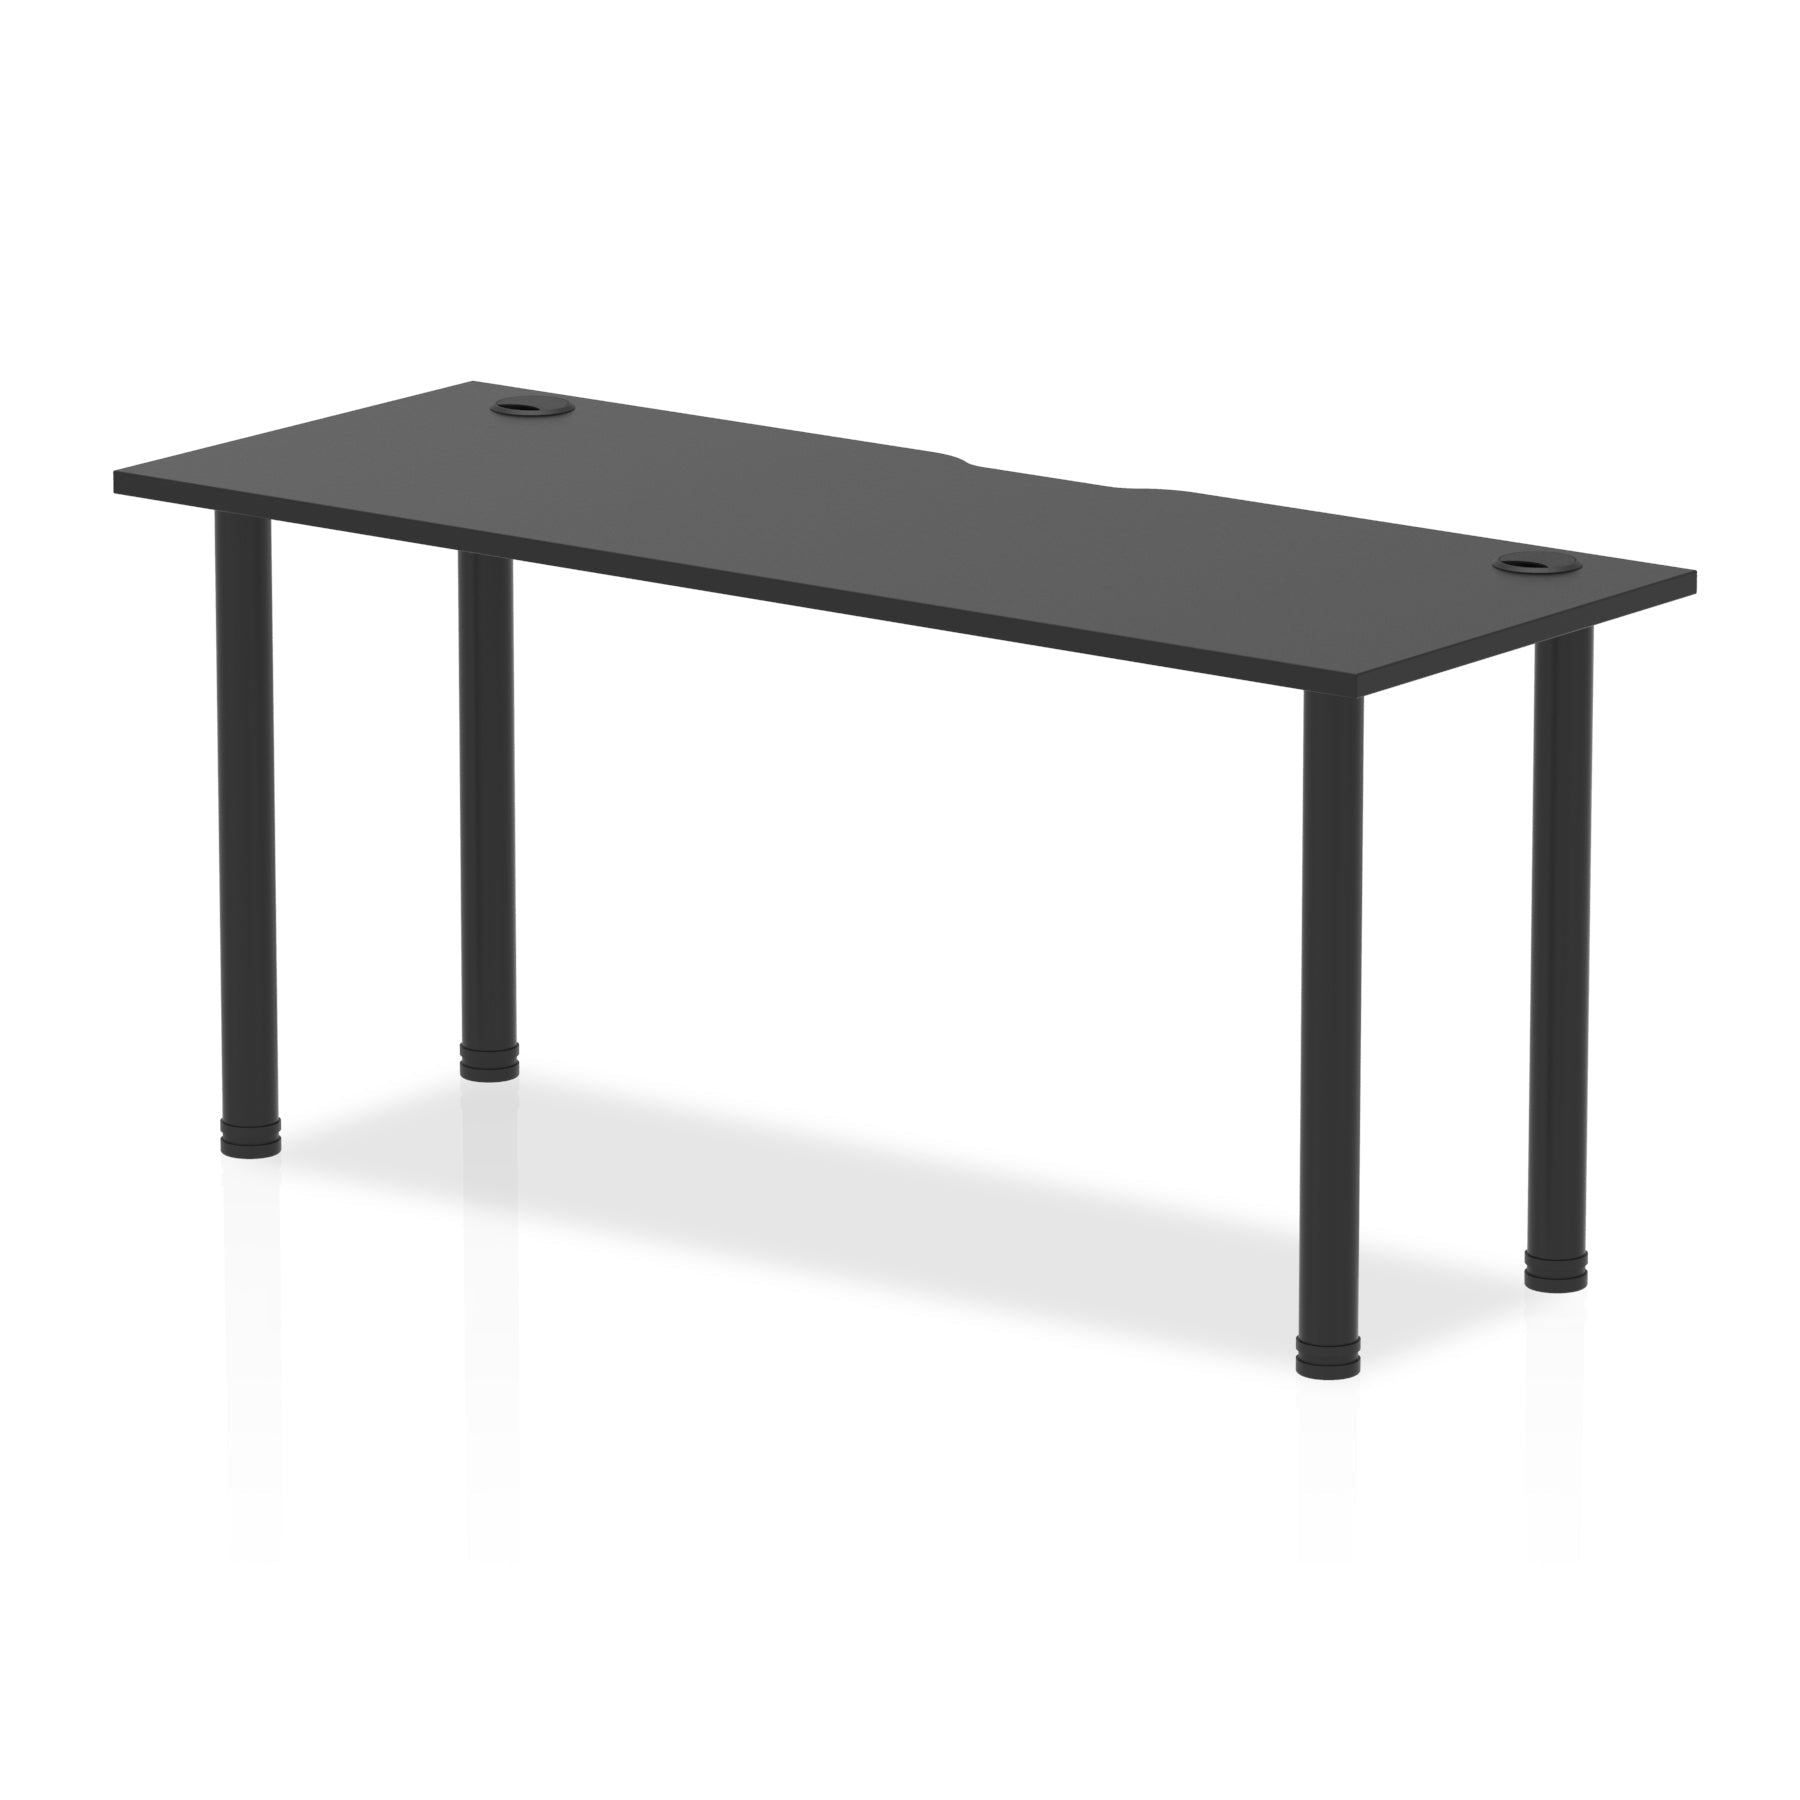 Impulse Black Series Slimline Straight Table - MFC Rectangular Desk, 5-Year Guarantee, Self-Assembly, Multiple Sizes & Frame Colors